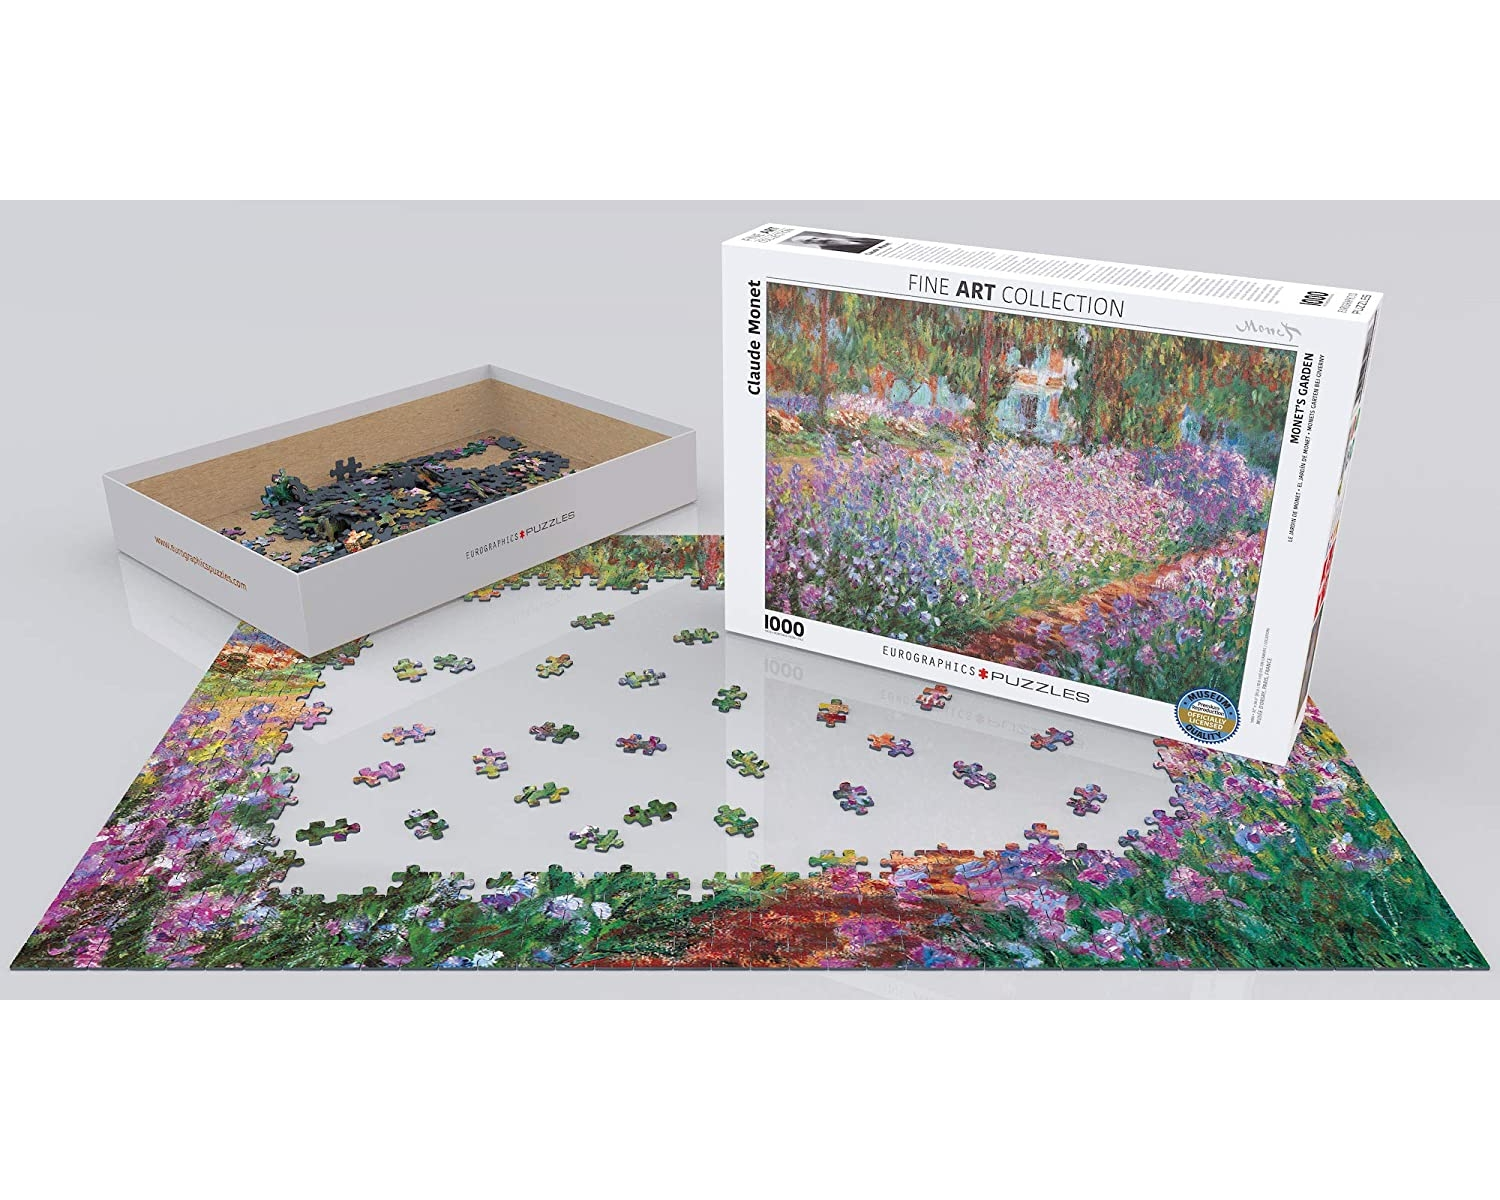 EUROGRAPHICS Monets Garten - (1000) Claude Monet Puzzle